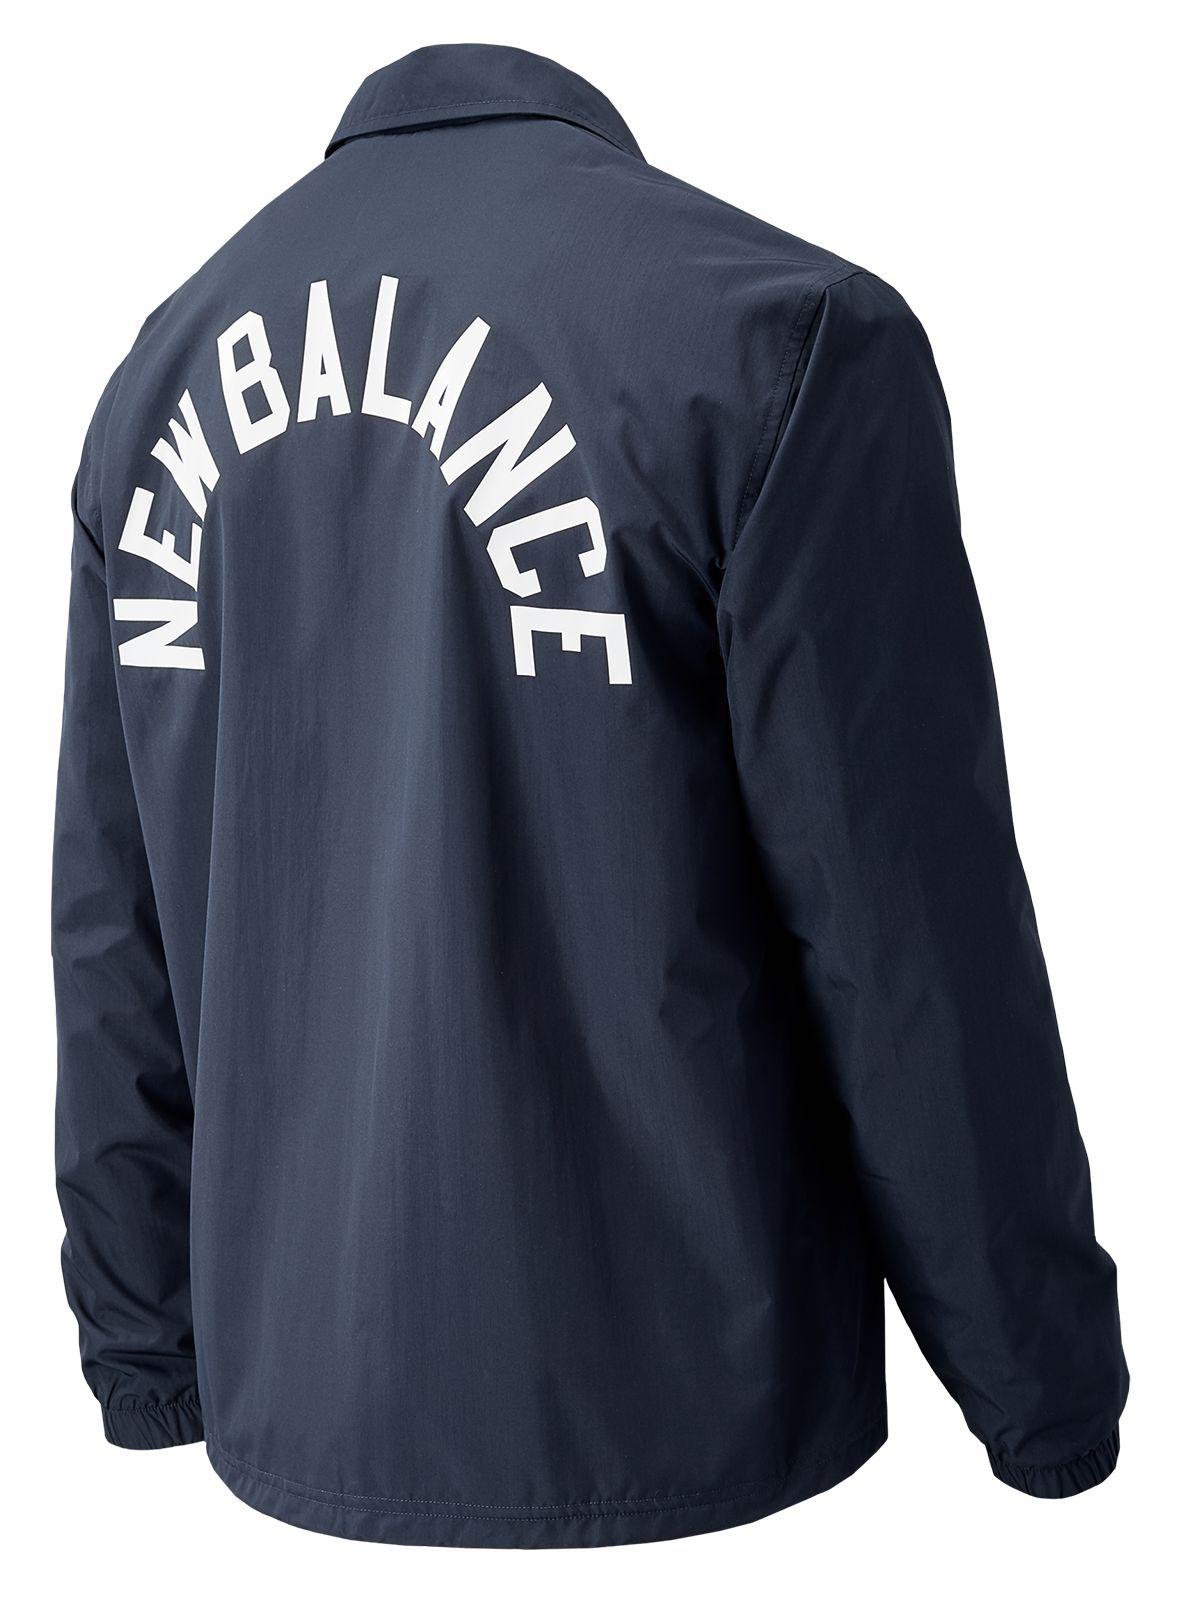 coach jacket new balance